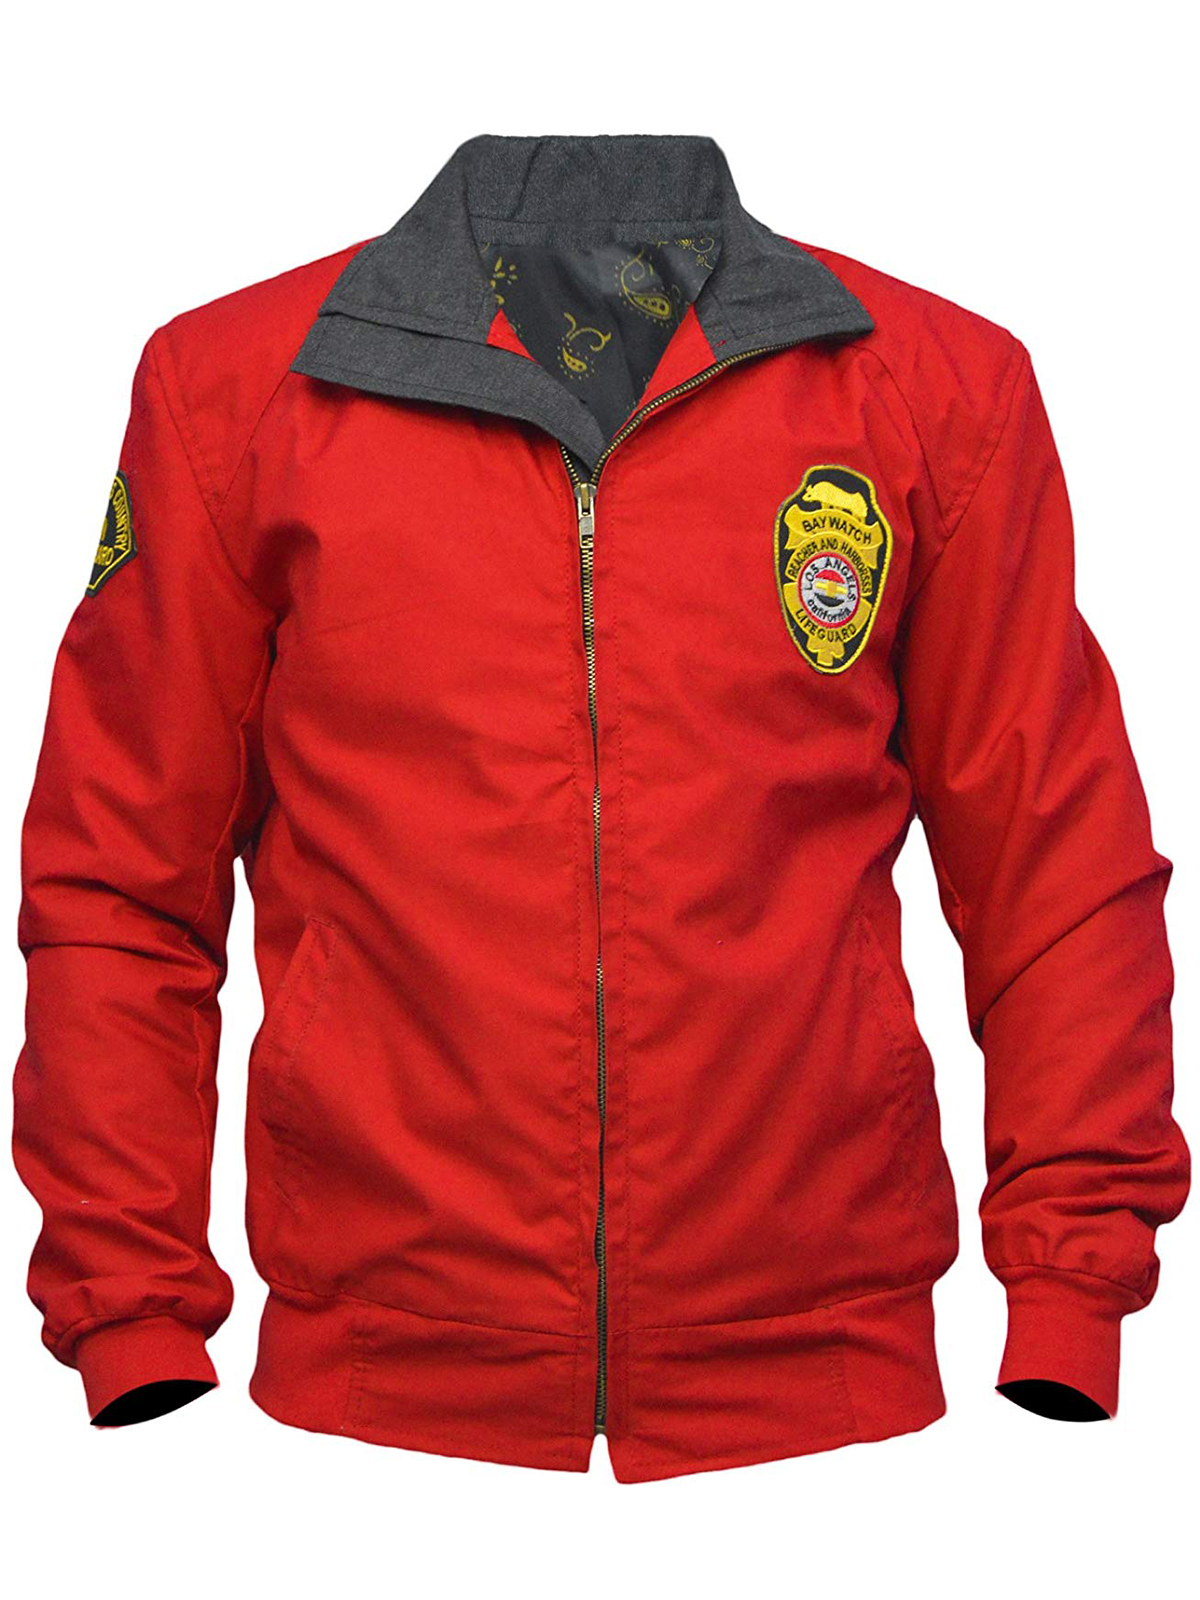 Baywatch Lifeguard Bomber Red Cotton Jacket